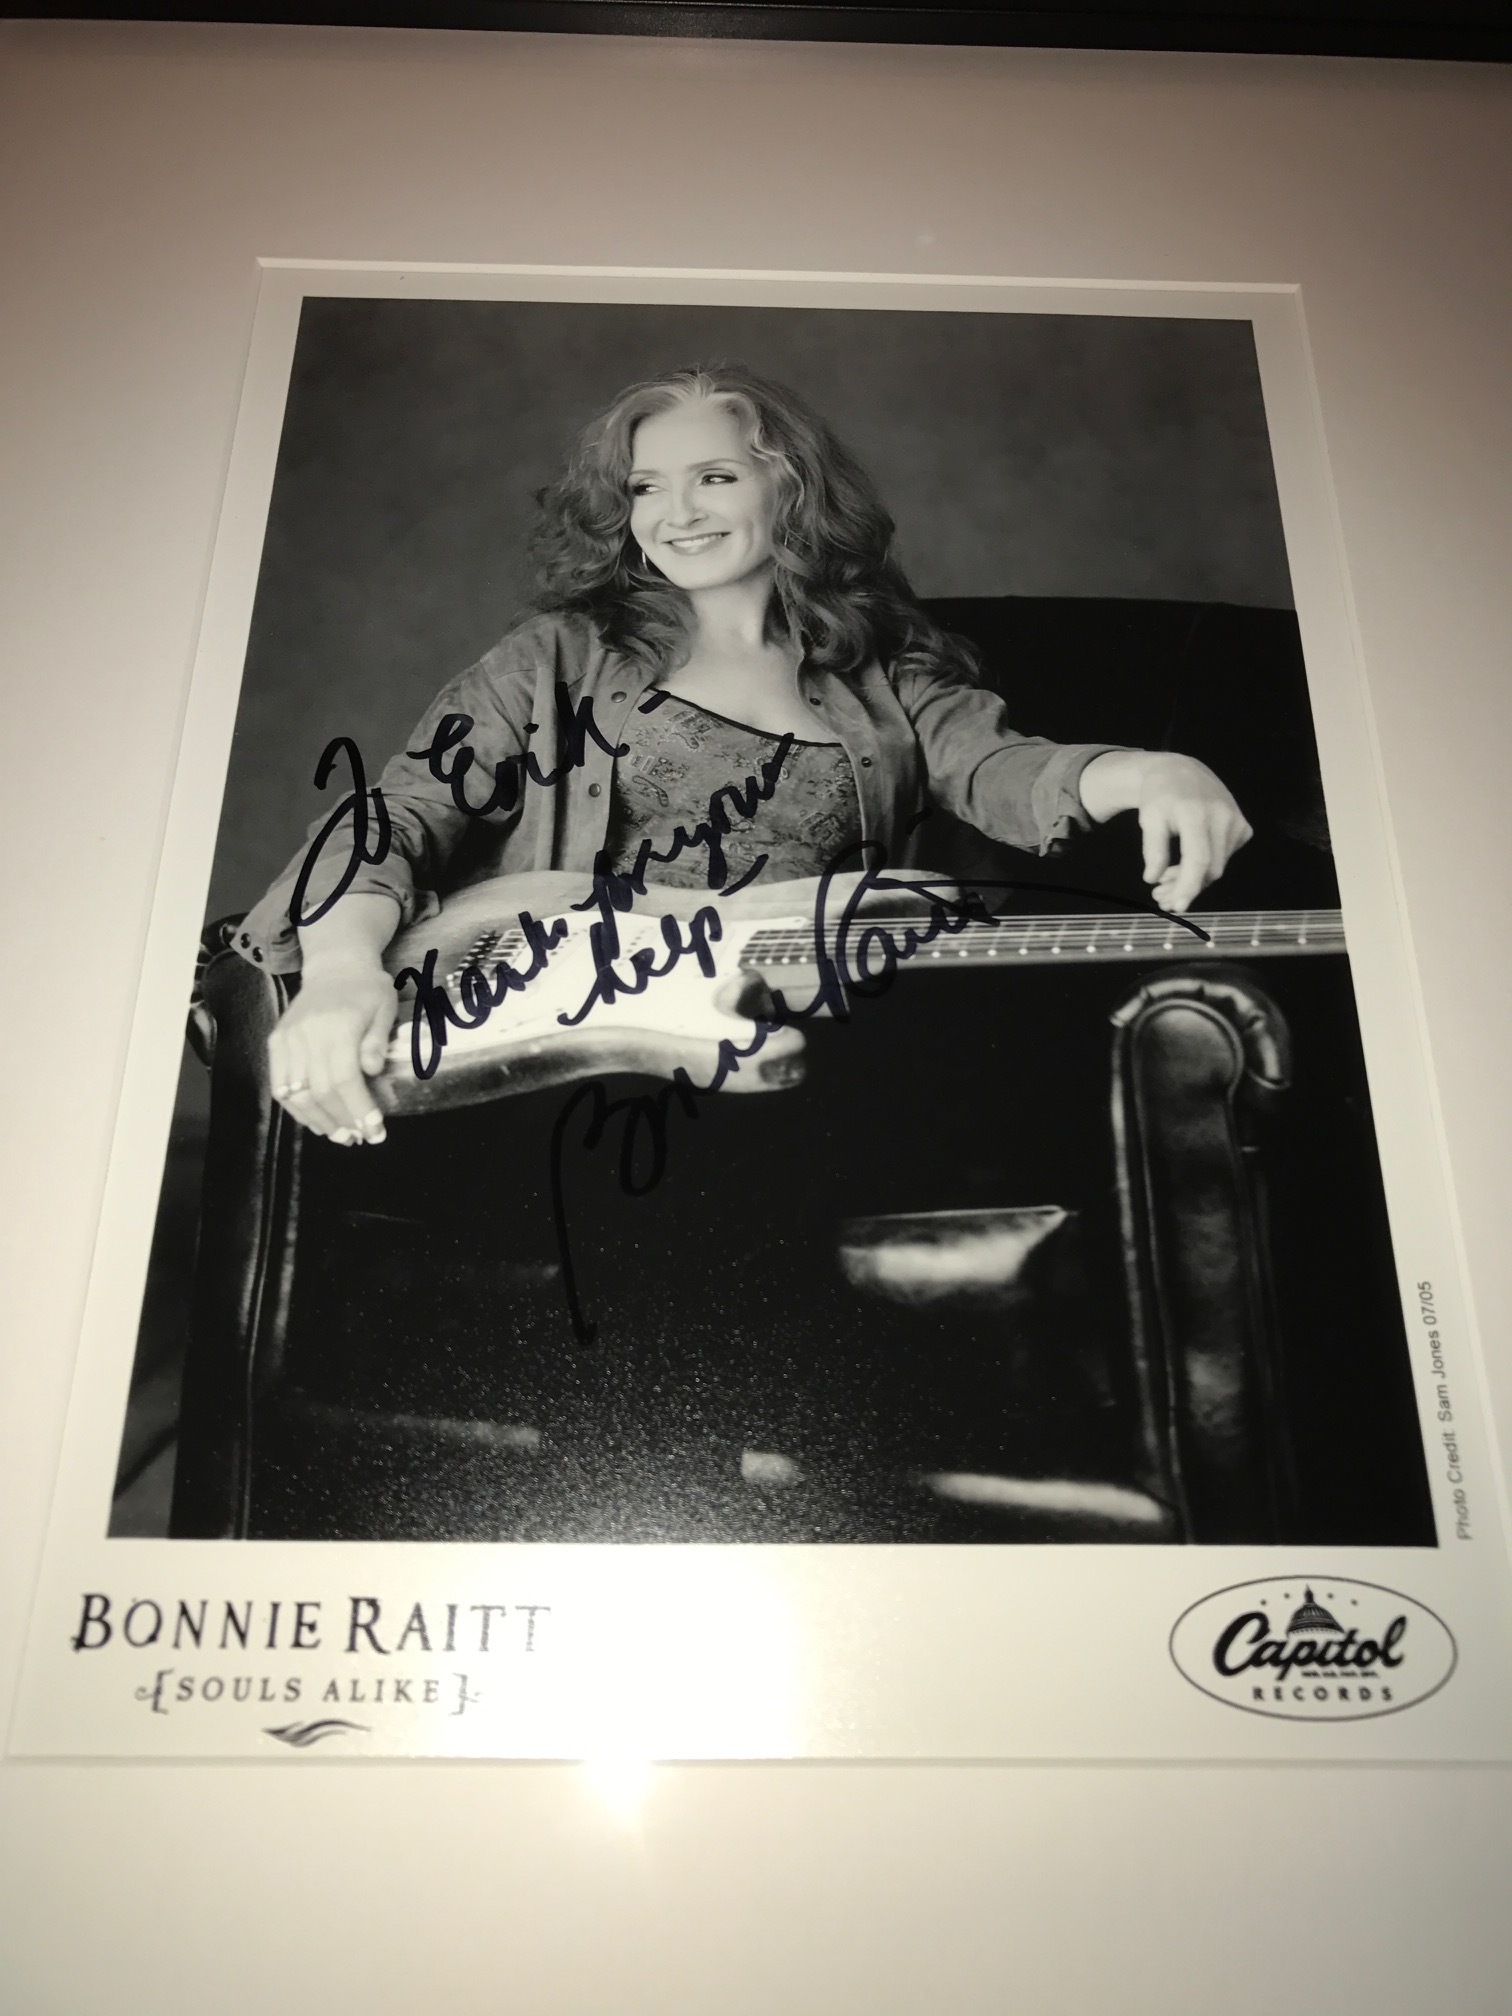 Bonnie Raitt photo signed.JPG